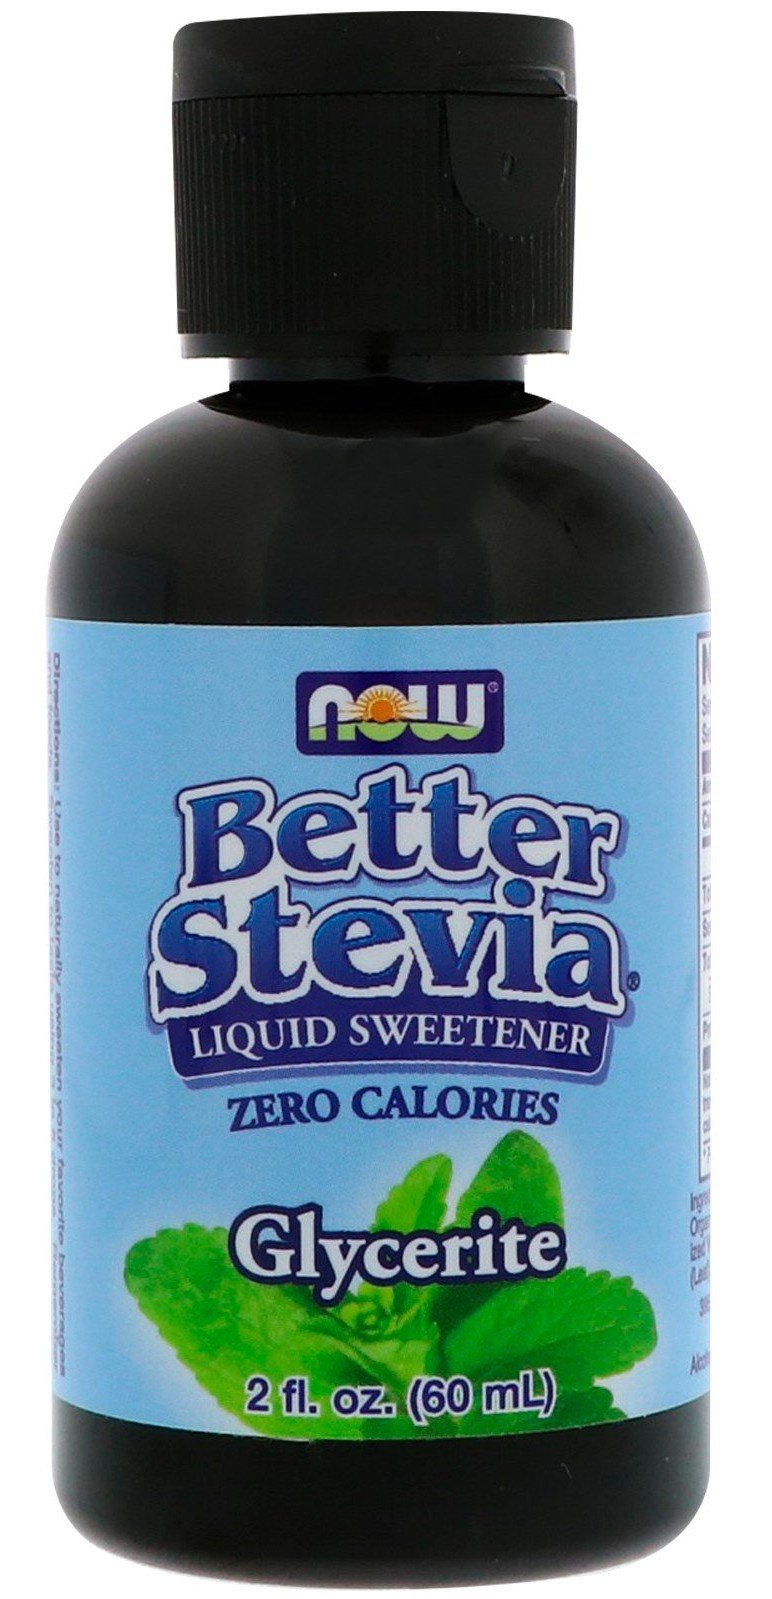 Better Stevia Liquid, 60 мл, Now. Спец препараты. 